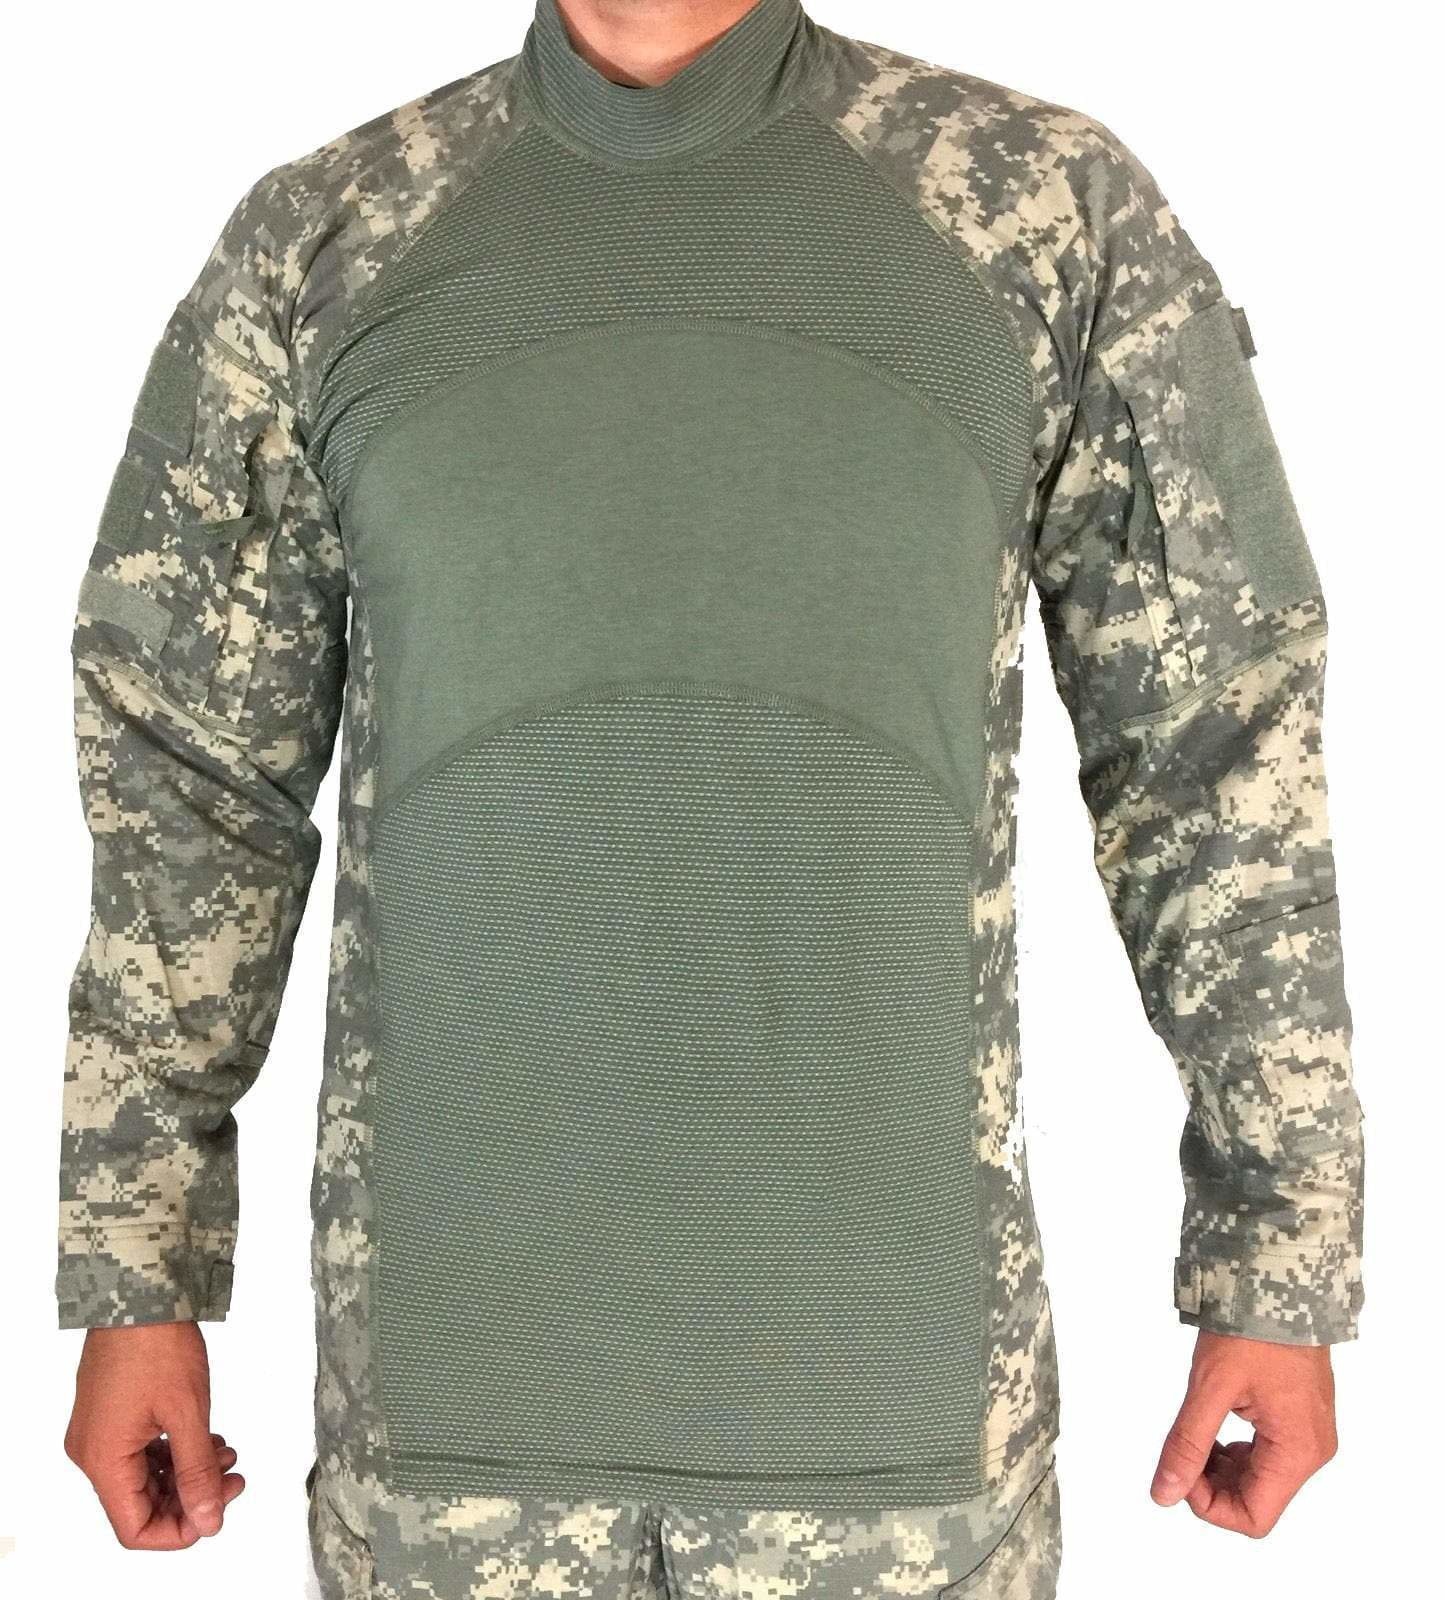 Military Army ACU Combat Shirt